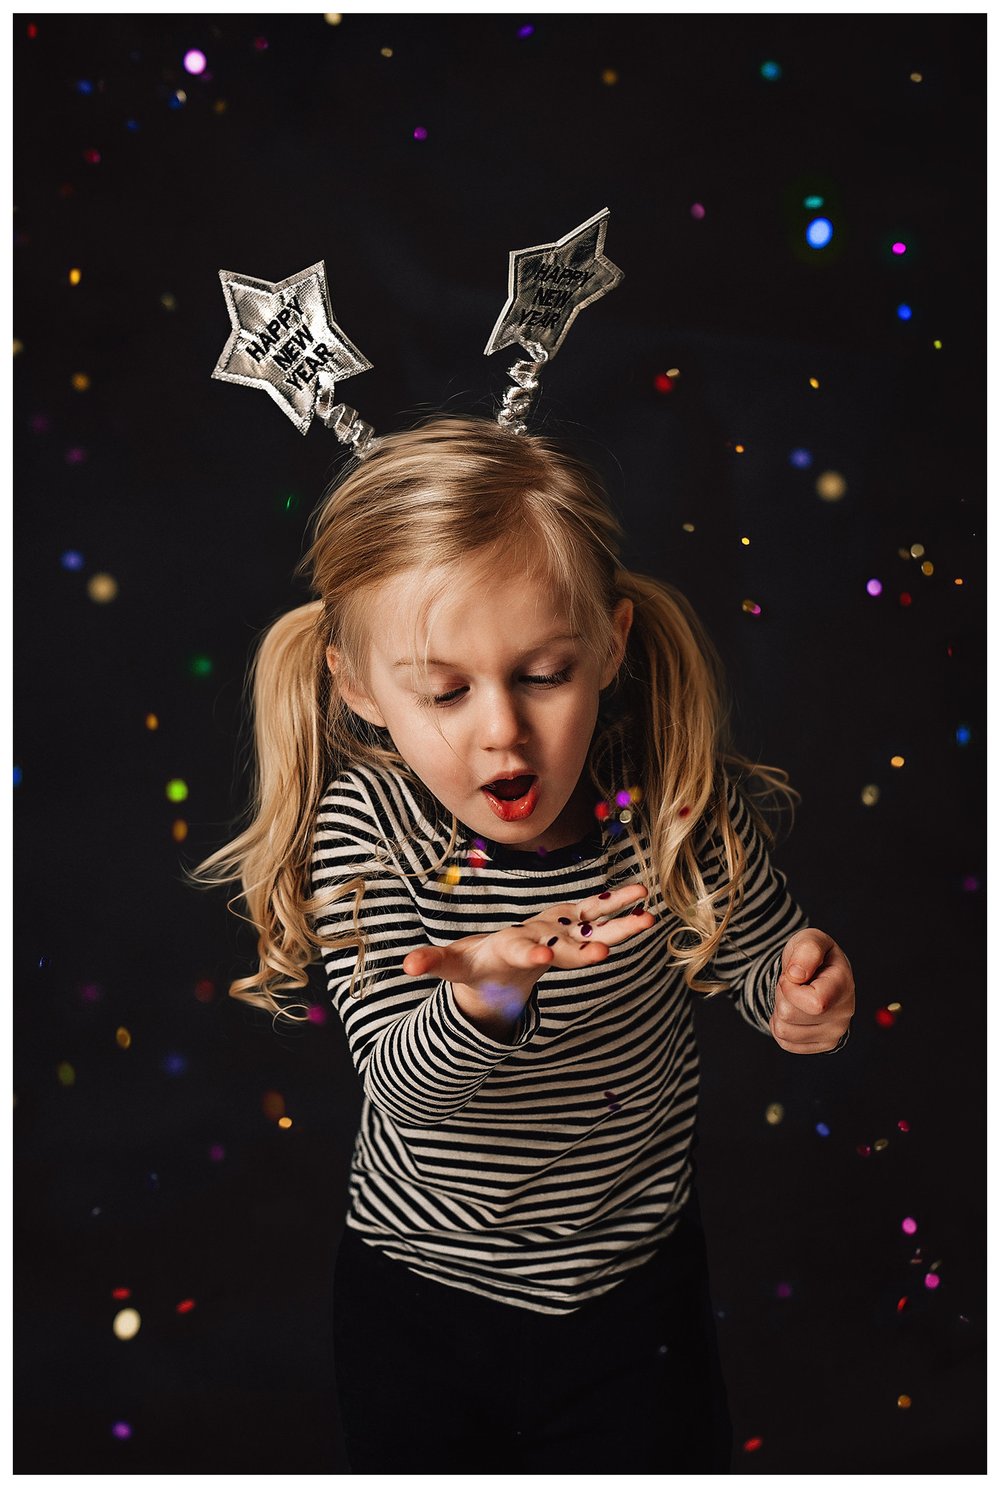 little girl blowing glitter happy new year studio portrait block background happy joyful excited child celebrating